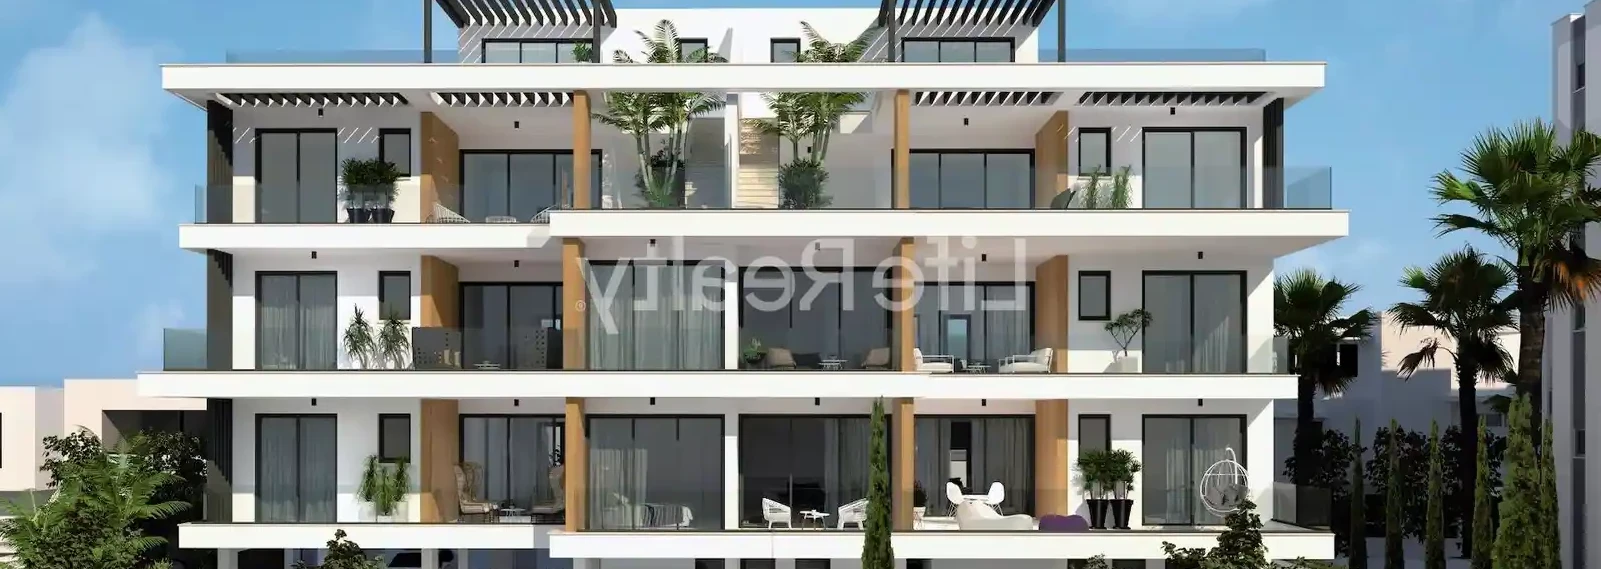 3-bedroom penthouse fоr sаle €960.000, image 1